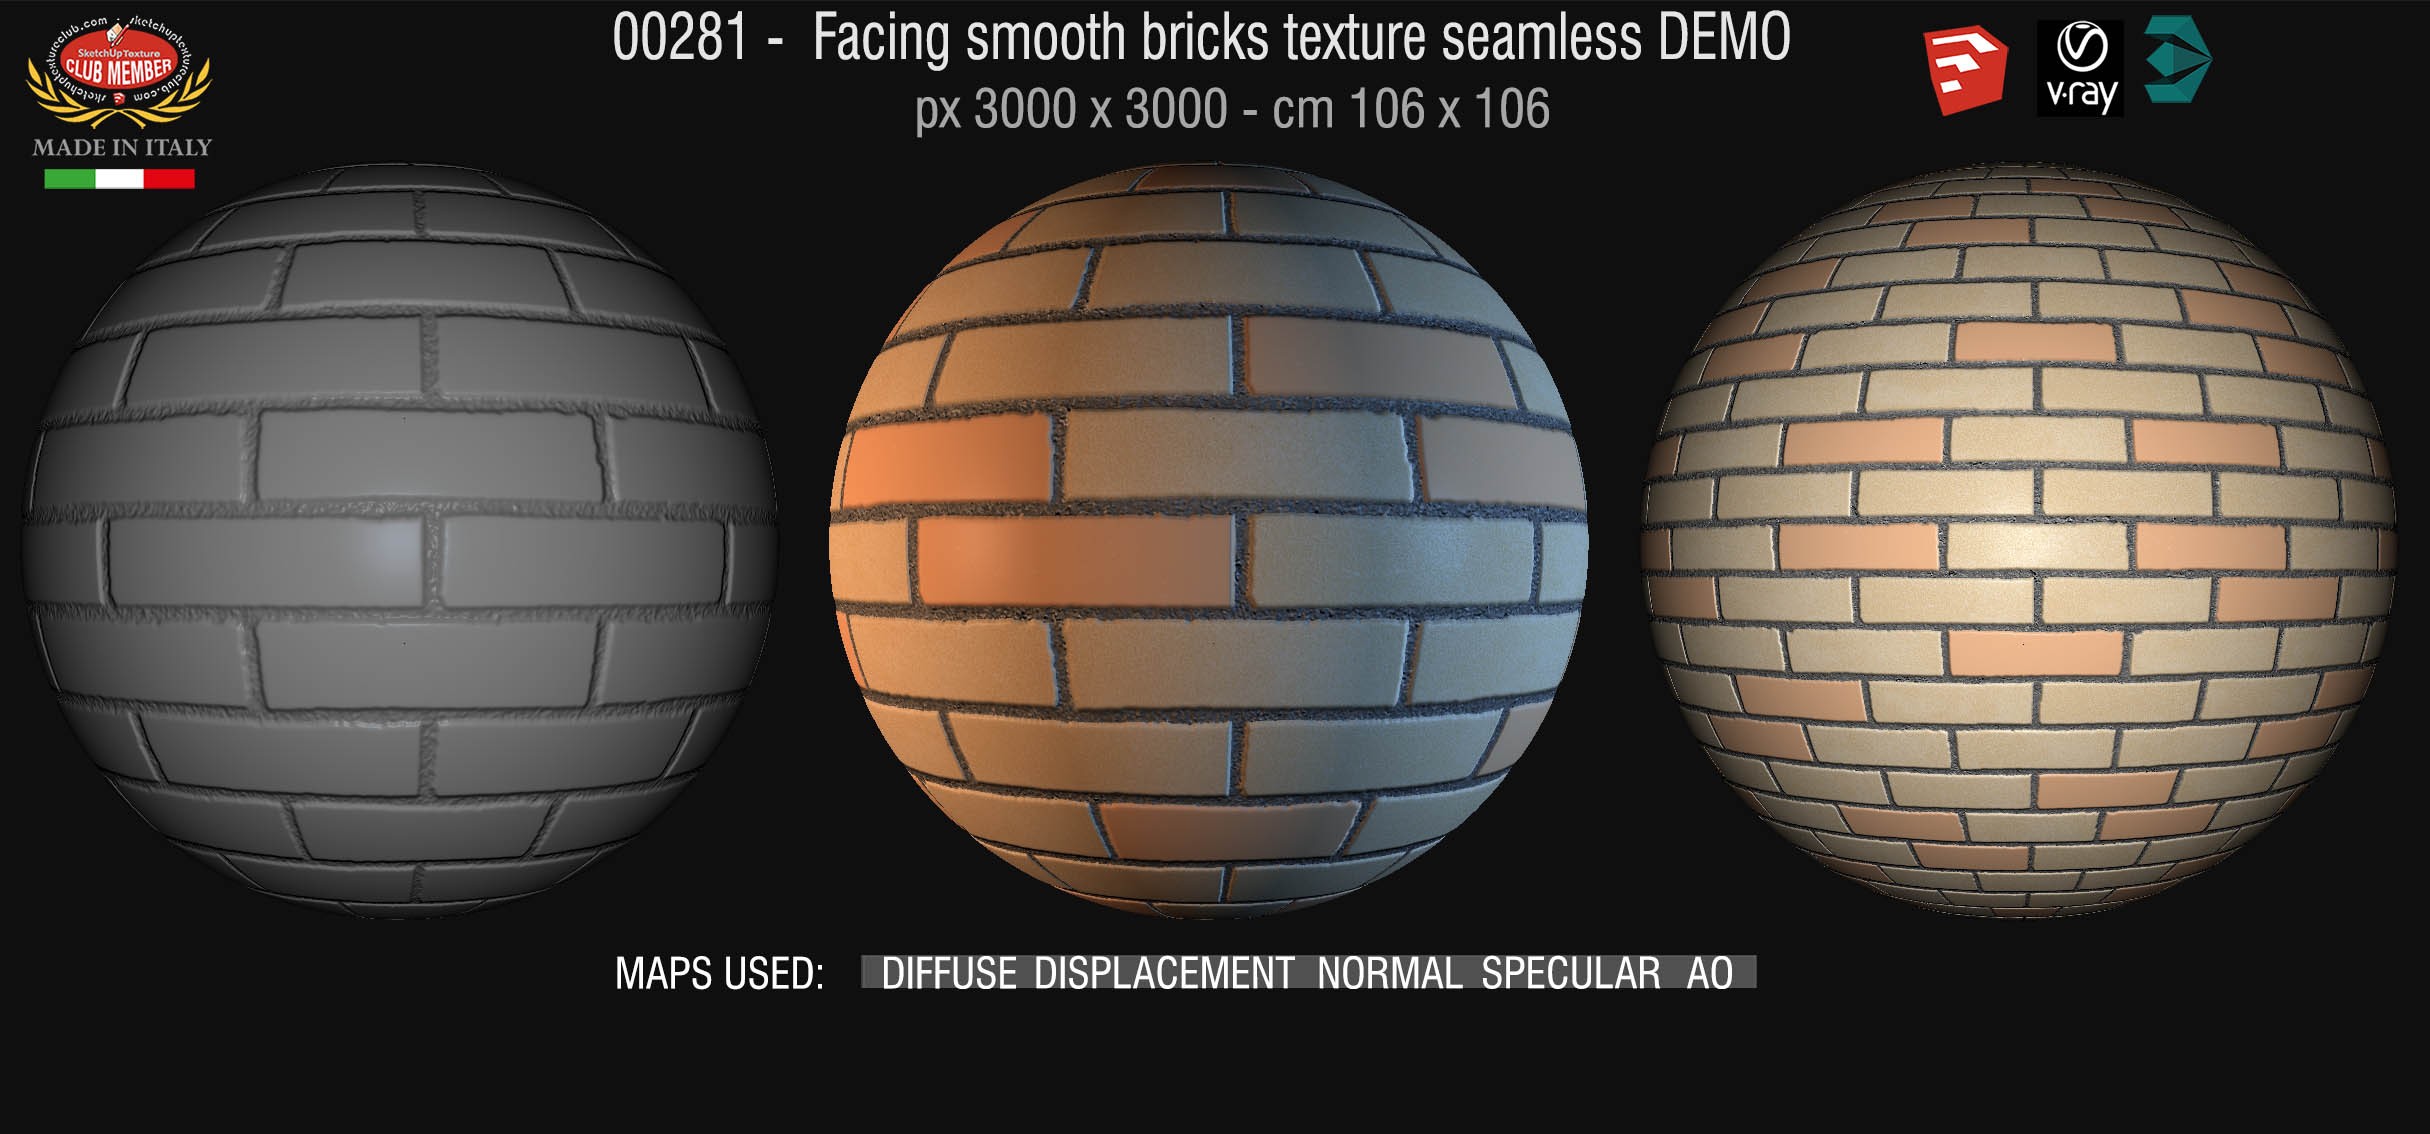 00281 Facing smooth bricks texture seamless + maps DEMO